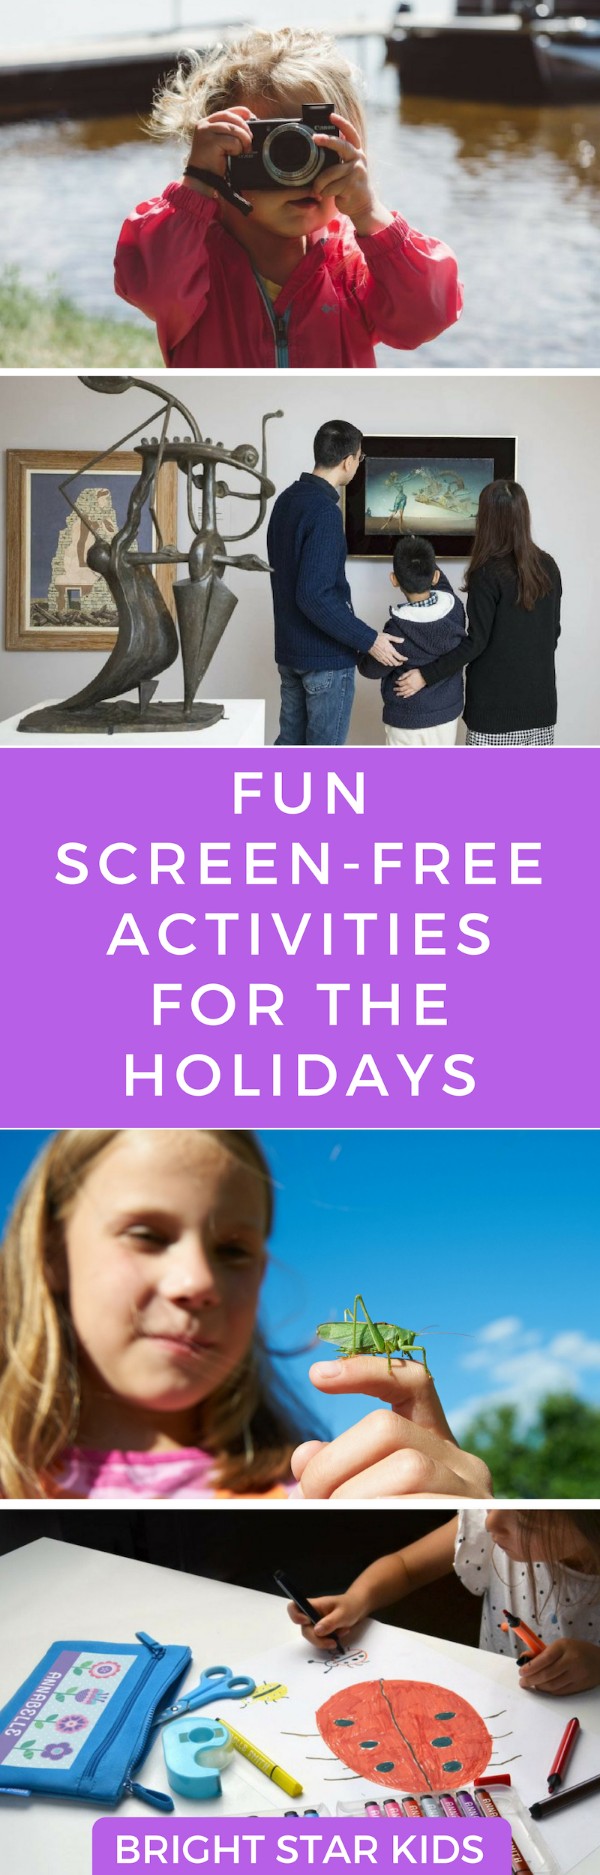 Fun Screen-free Activities